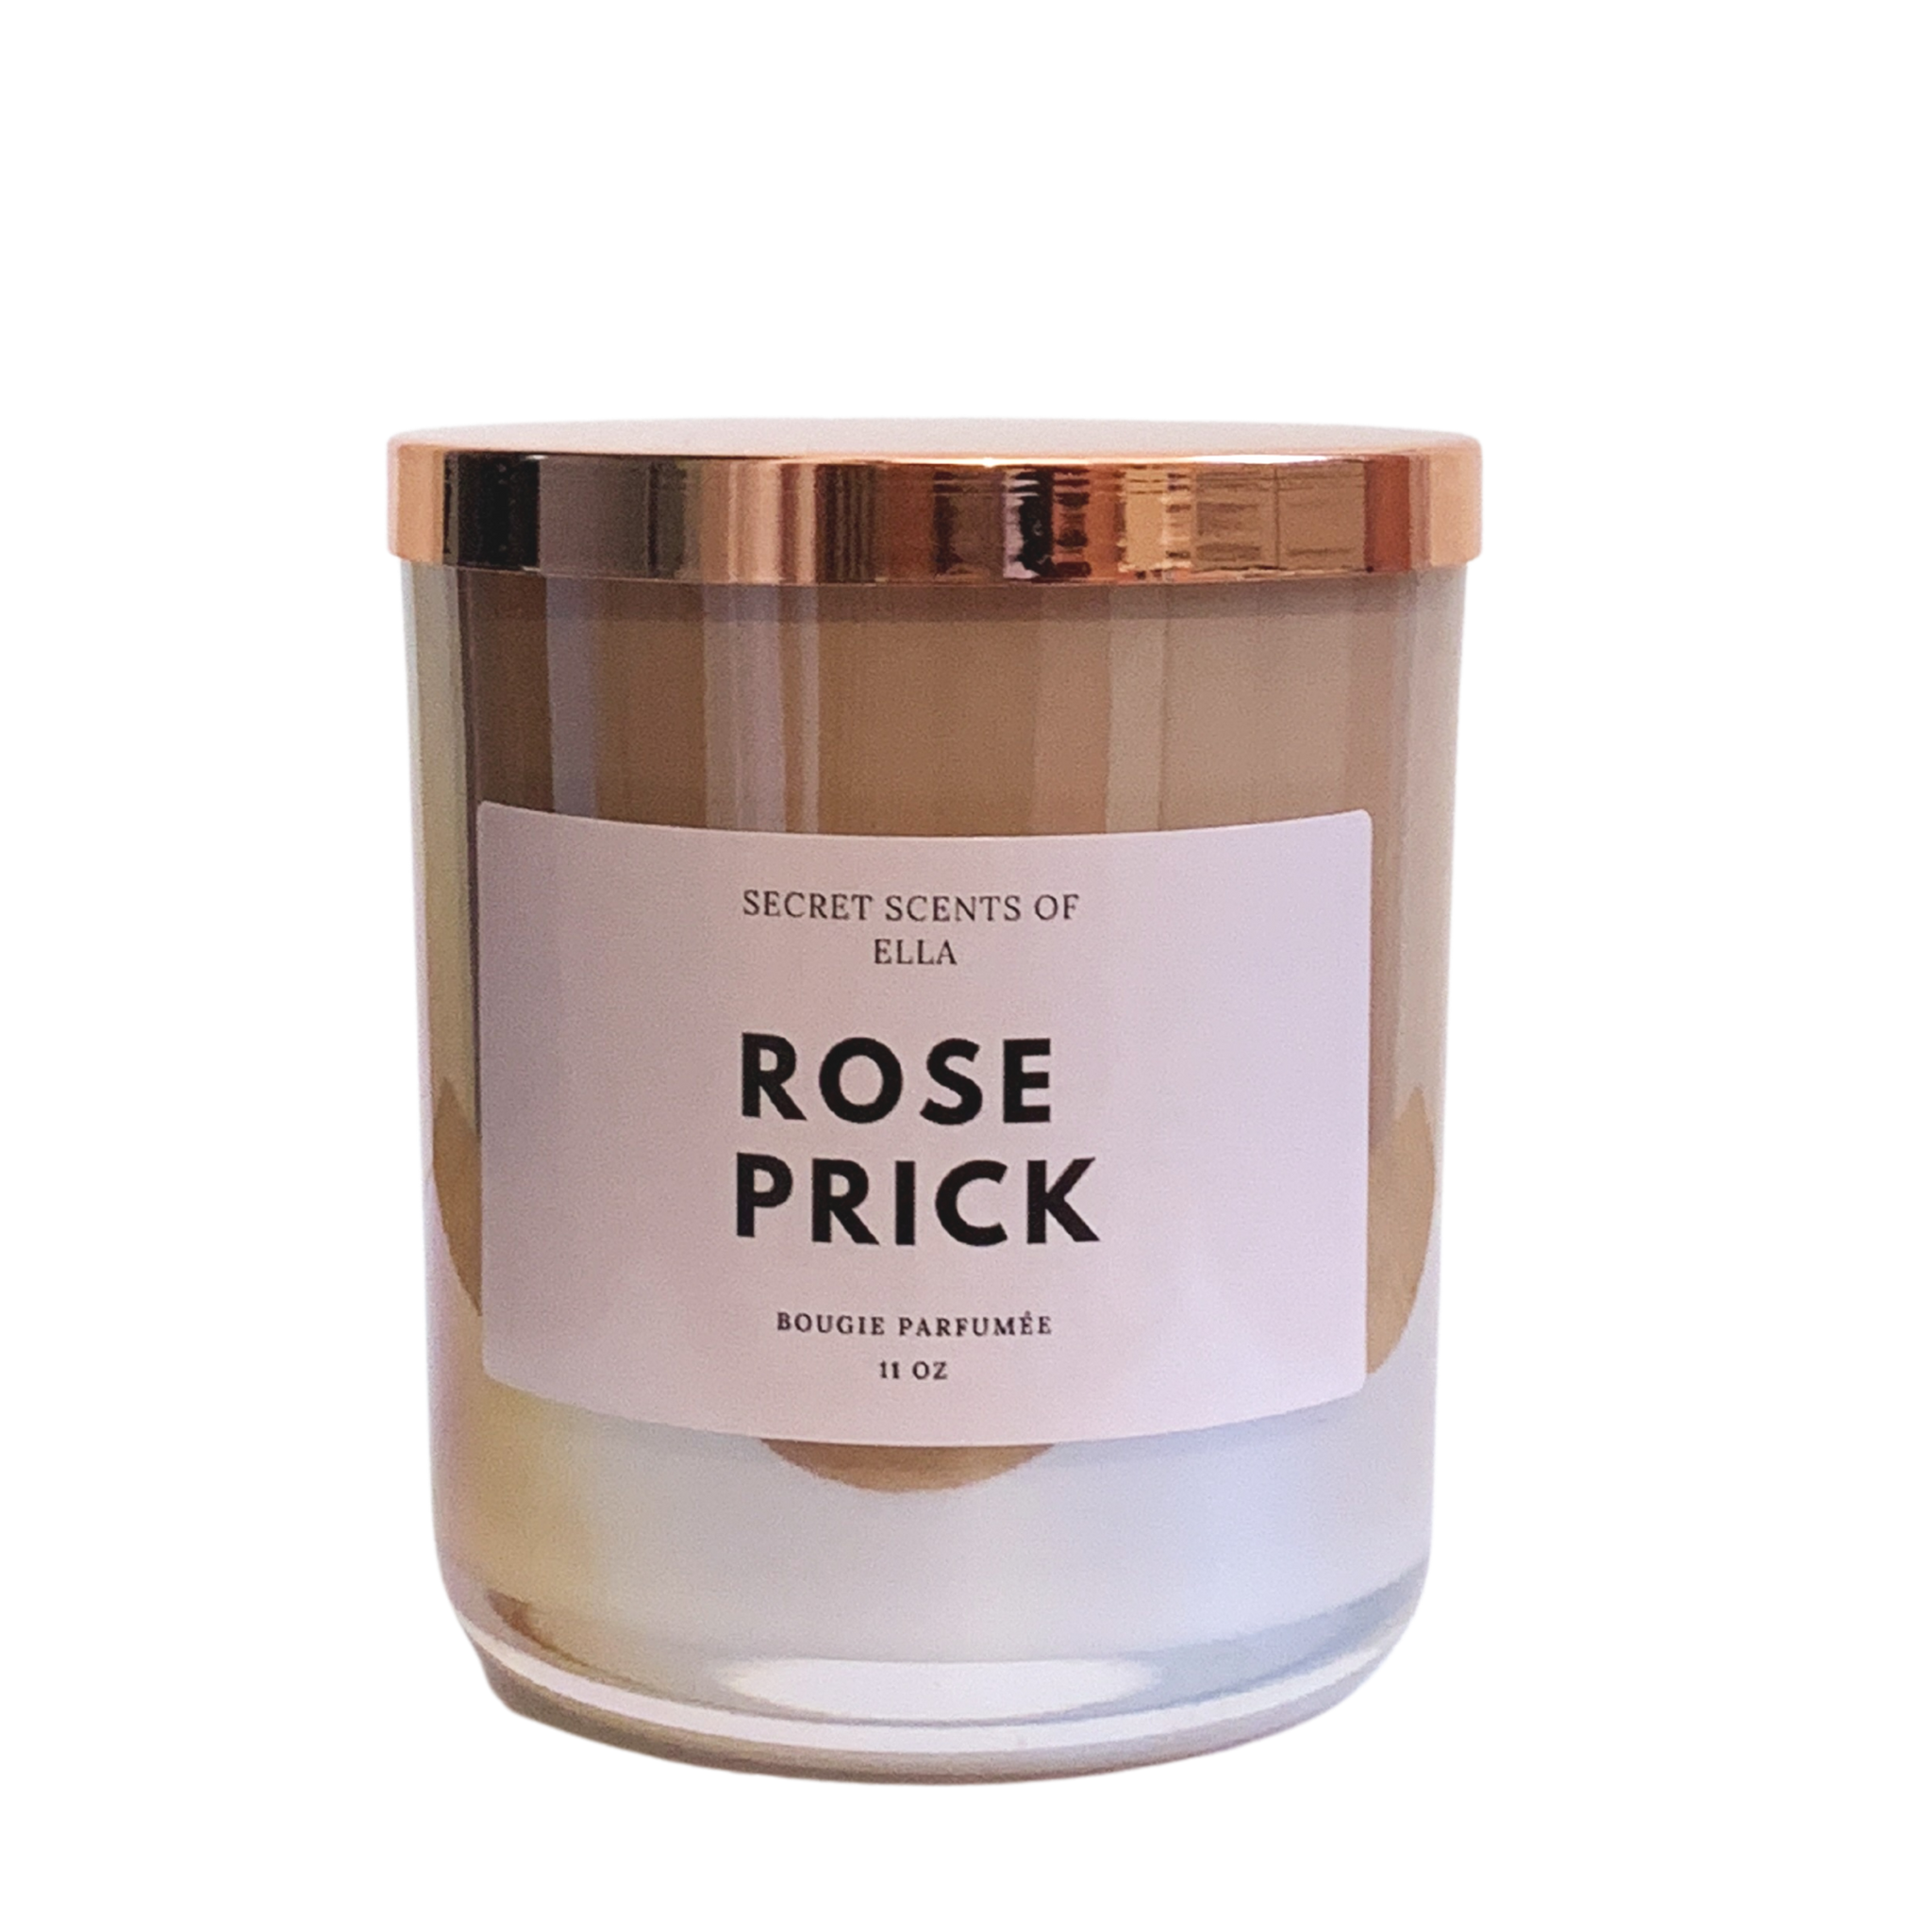 Rose Prick Candle - Secret Scents of Ella